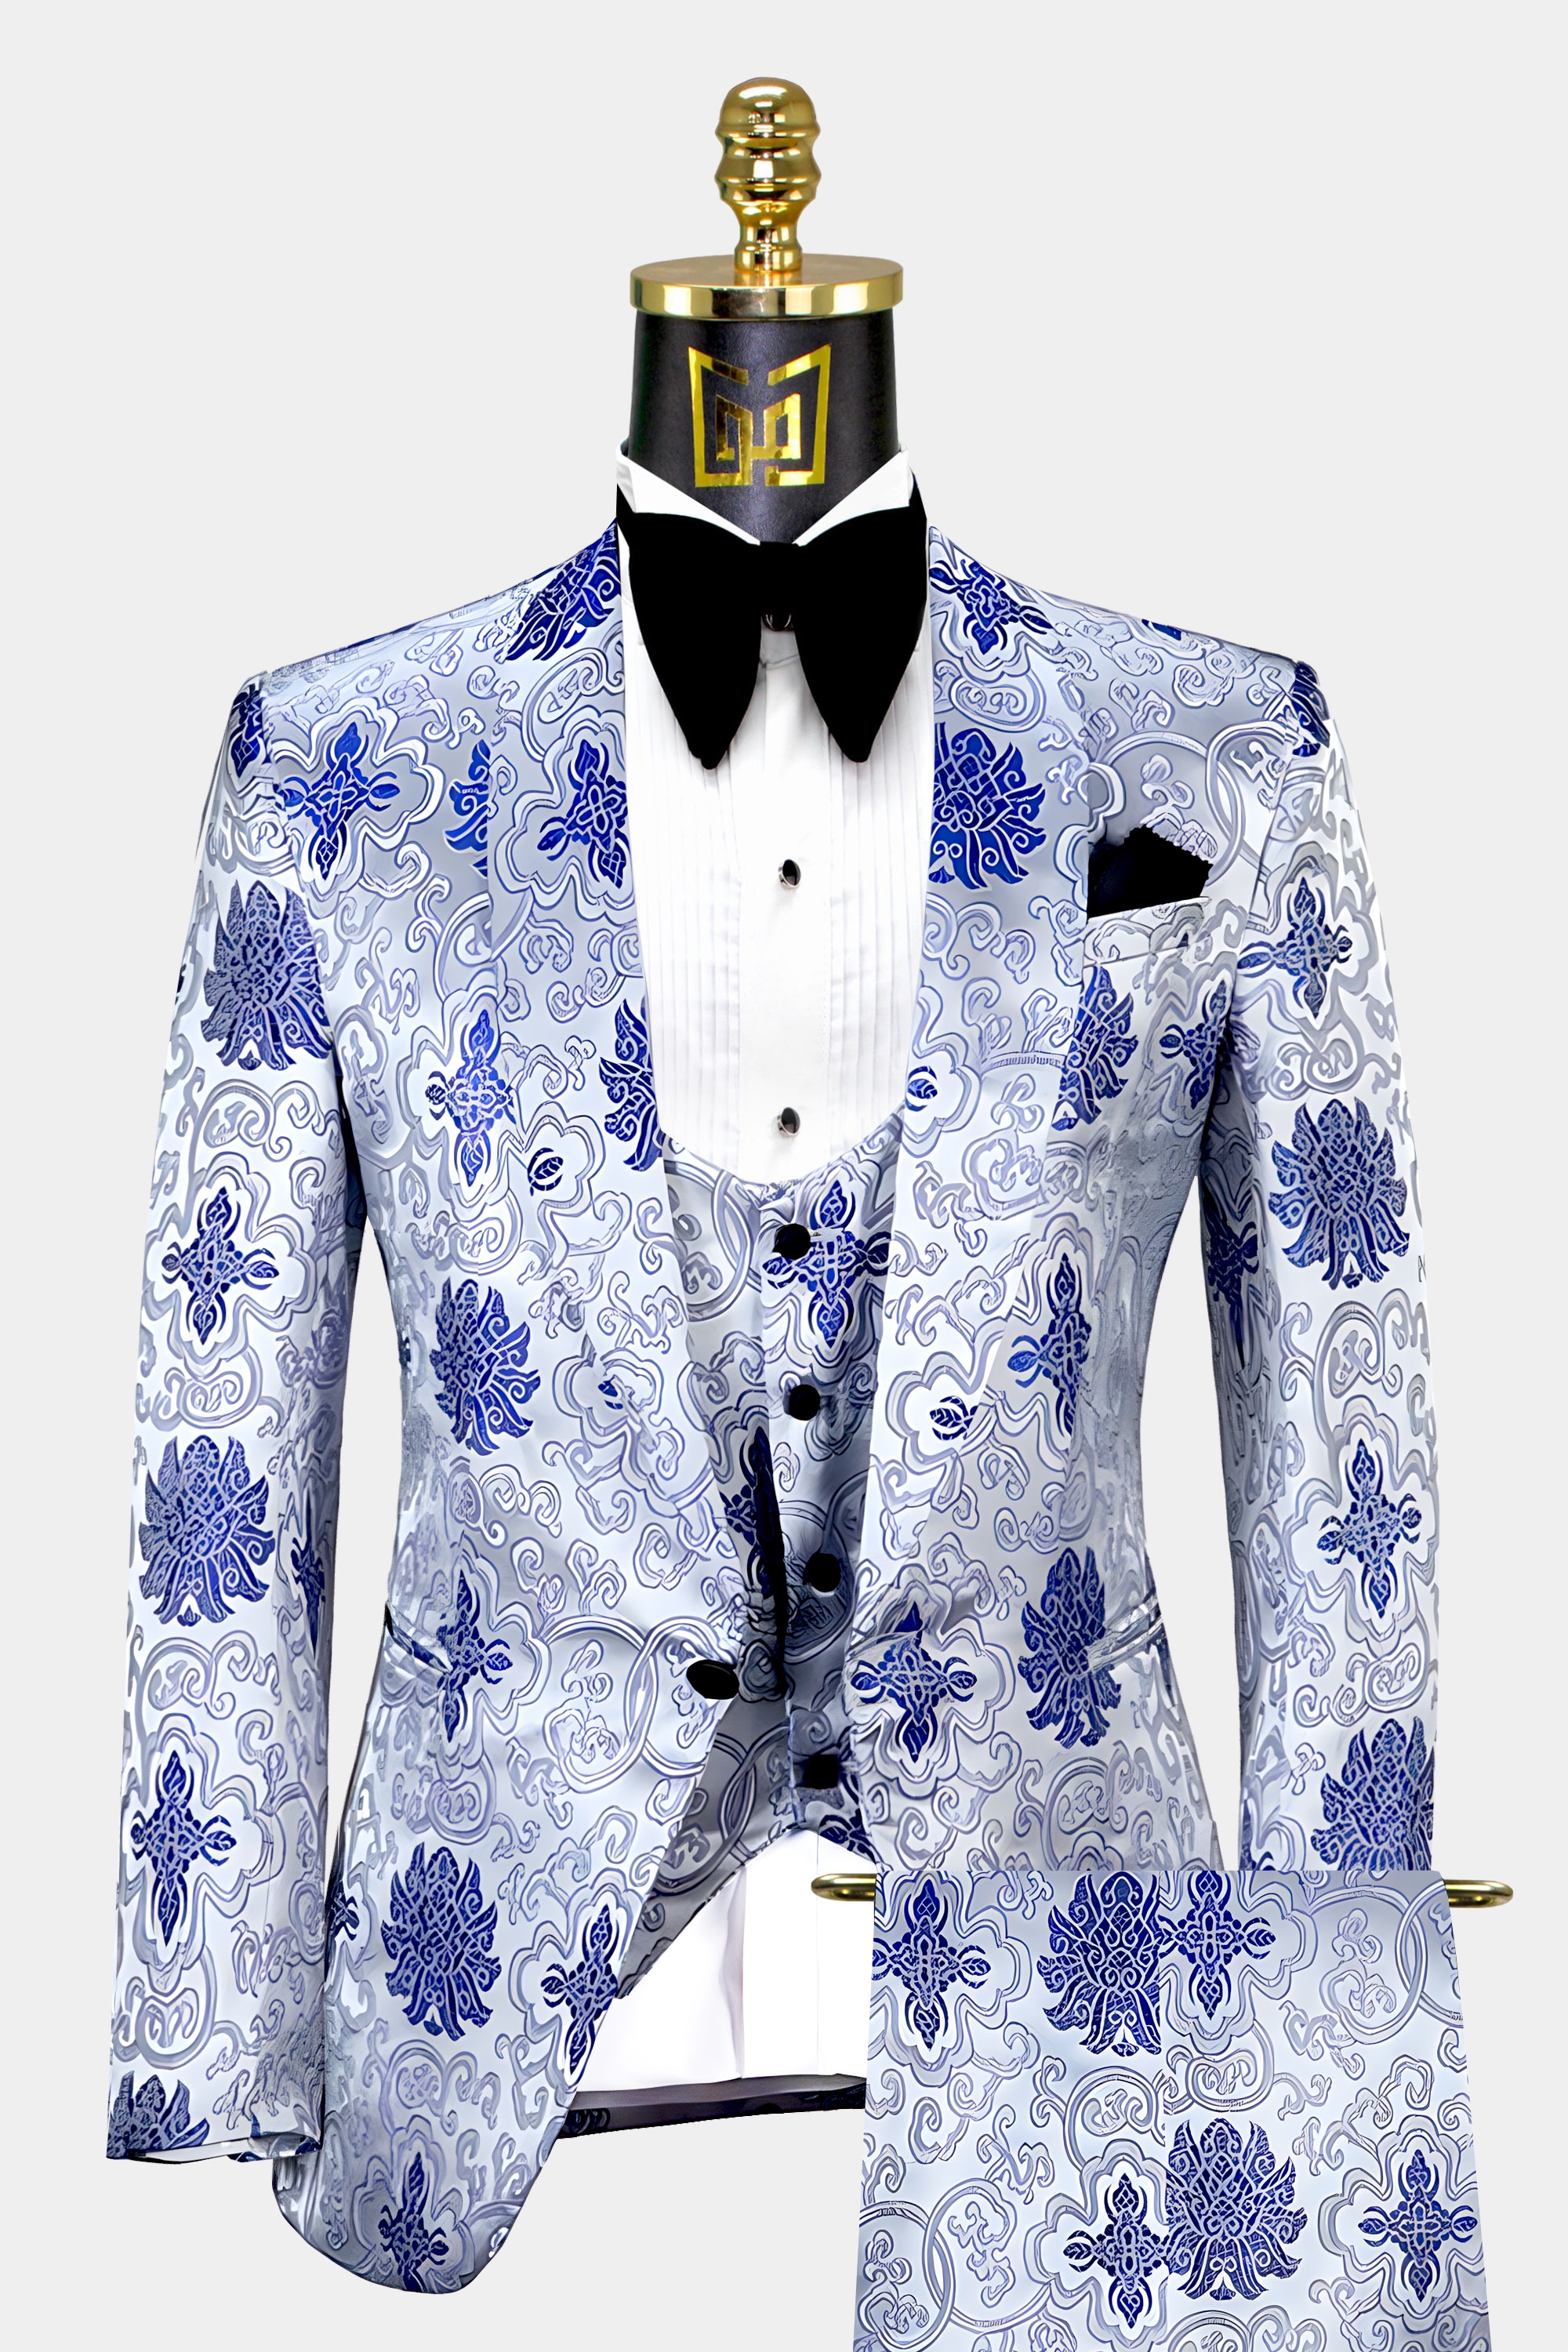 Mens-Royal-Blue-and-Silver-Tuxedo-Groom-Wedding-Prom-Suit-from-Gentlemansguru.com